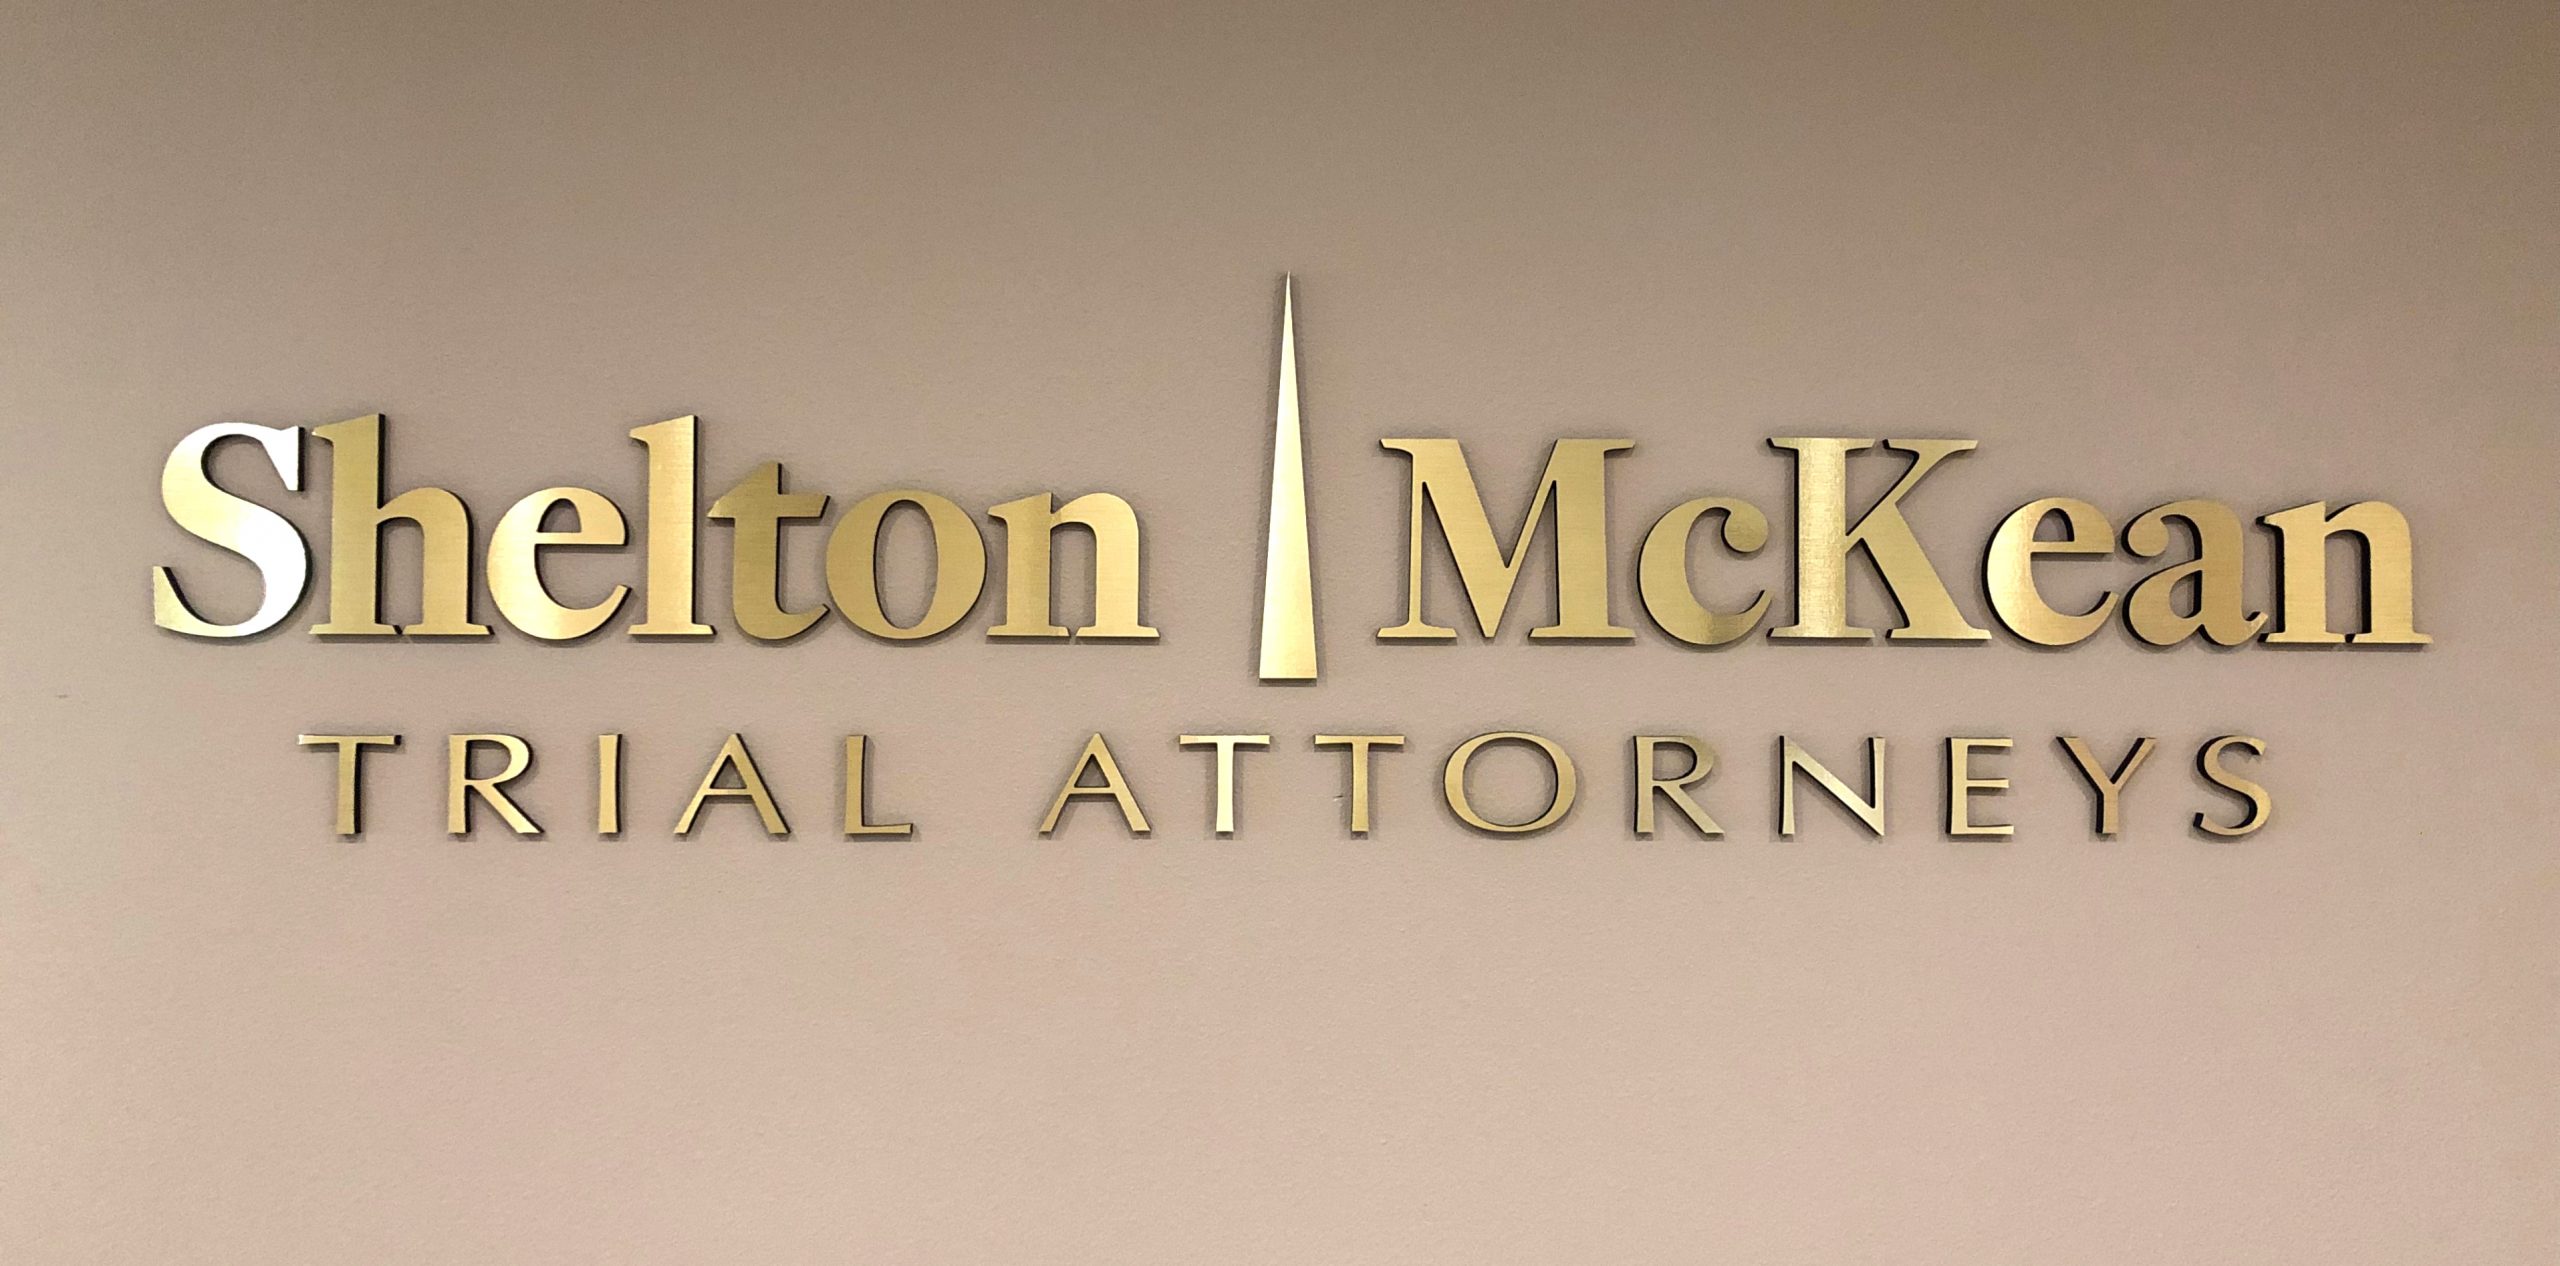 Personil Injury Lawyer In Mckean Pa Dans Shelton Mckean - Trial attorneys Linkedin